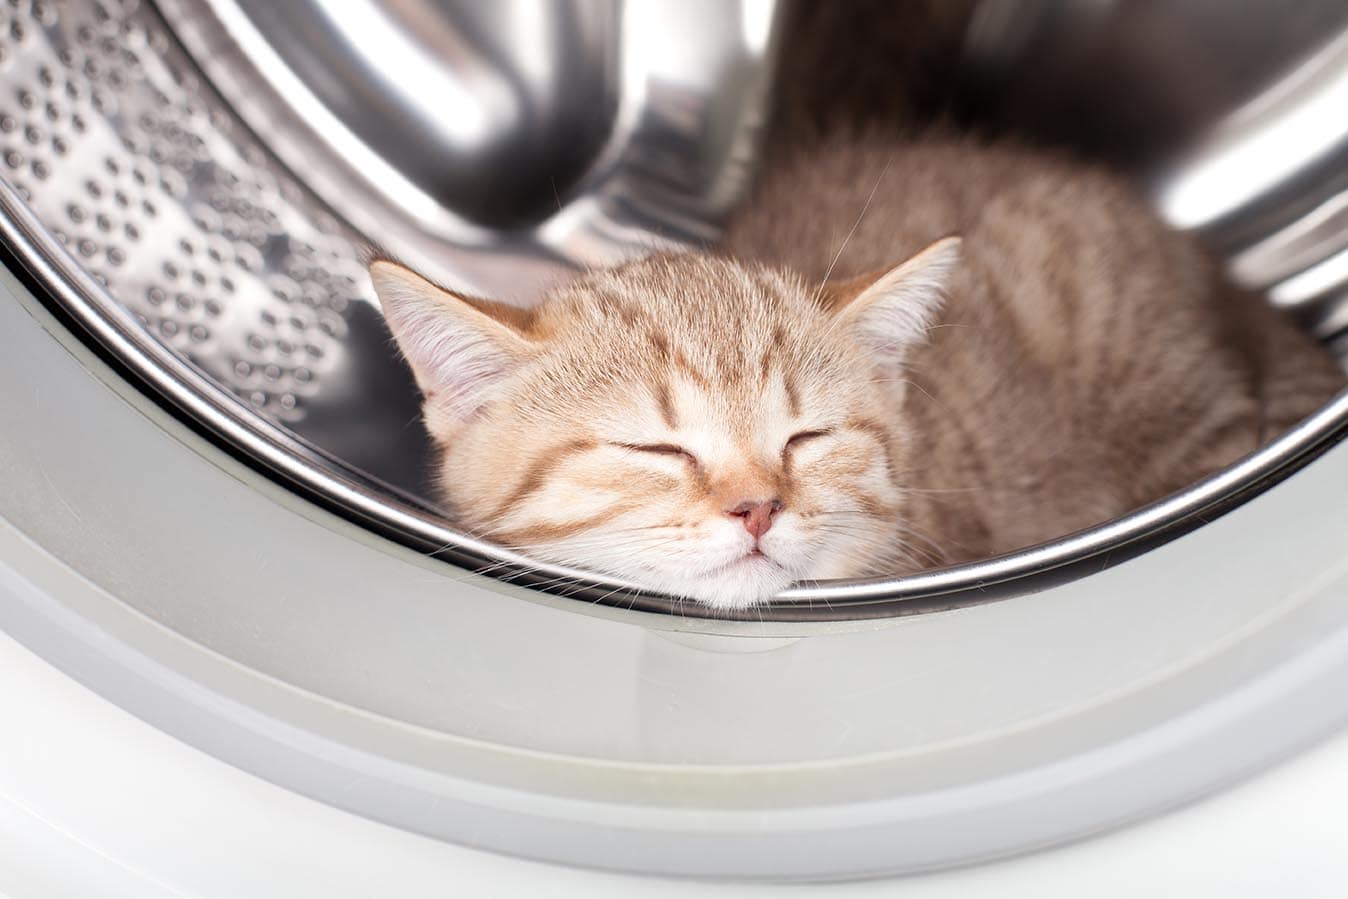 kitten inside laundry washer